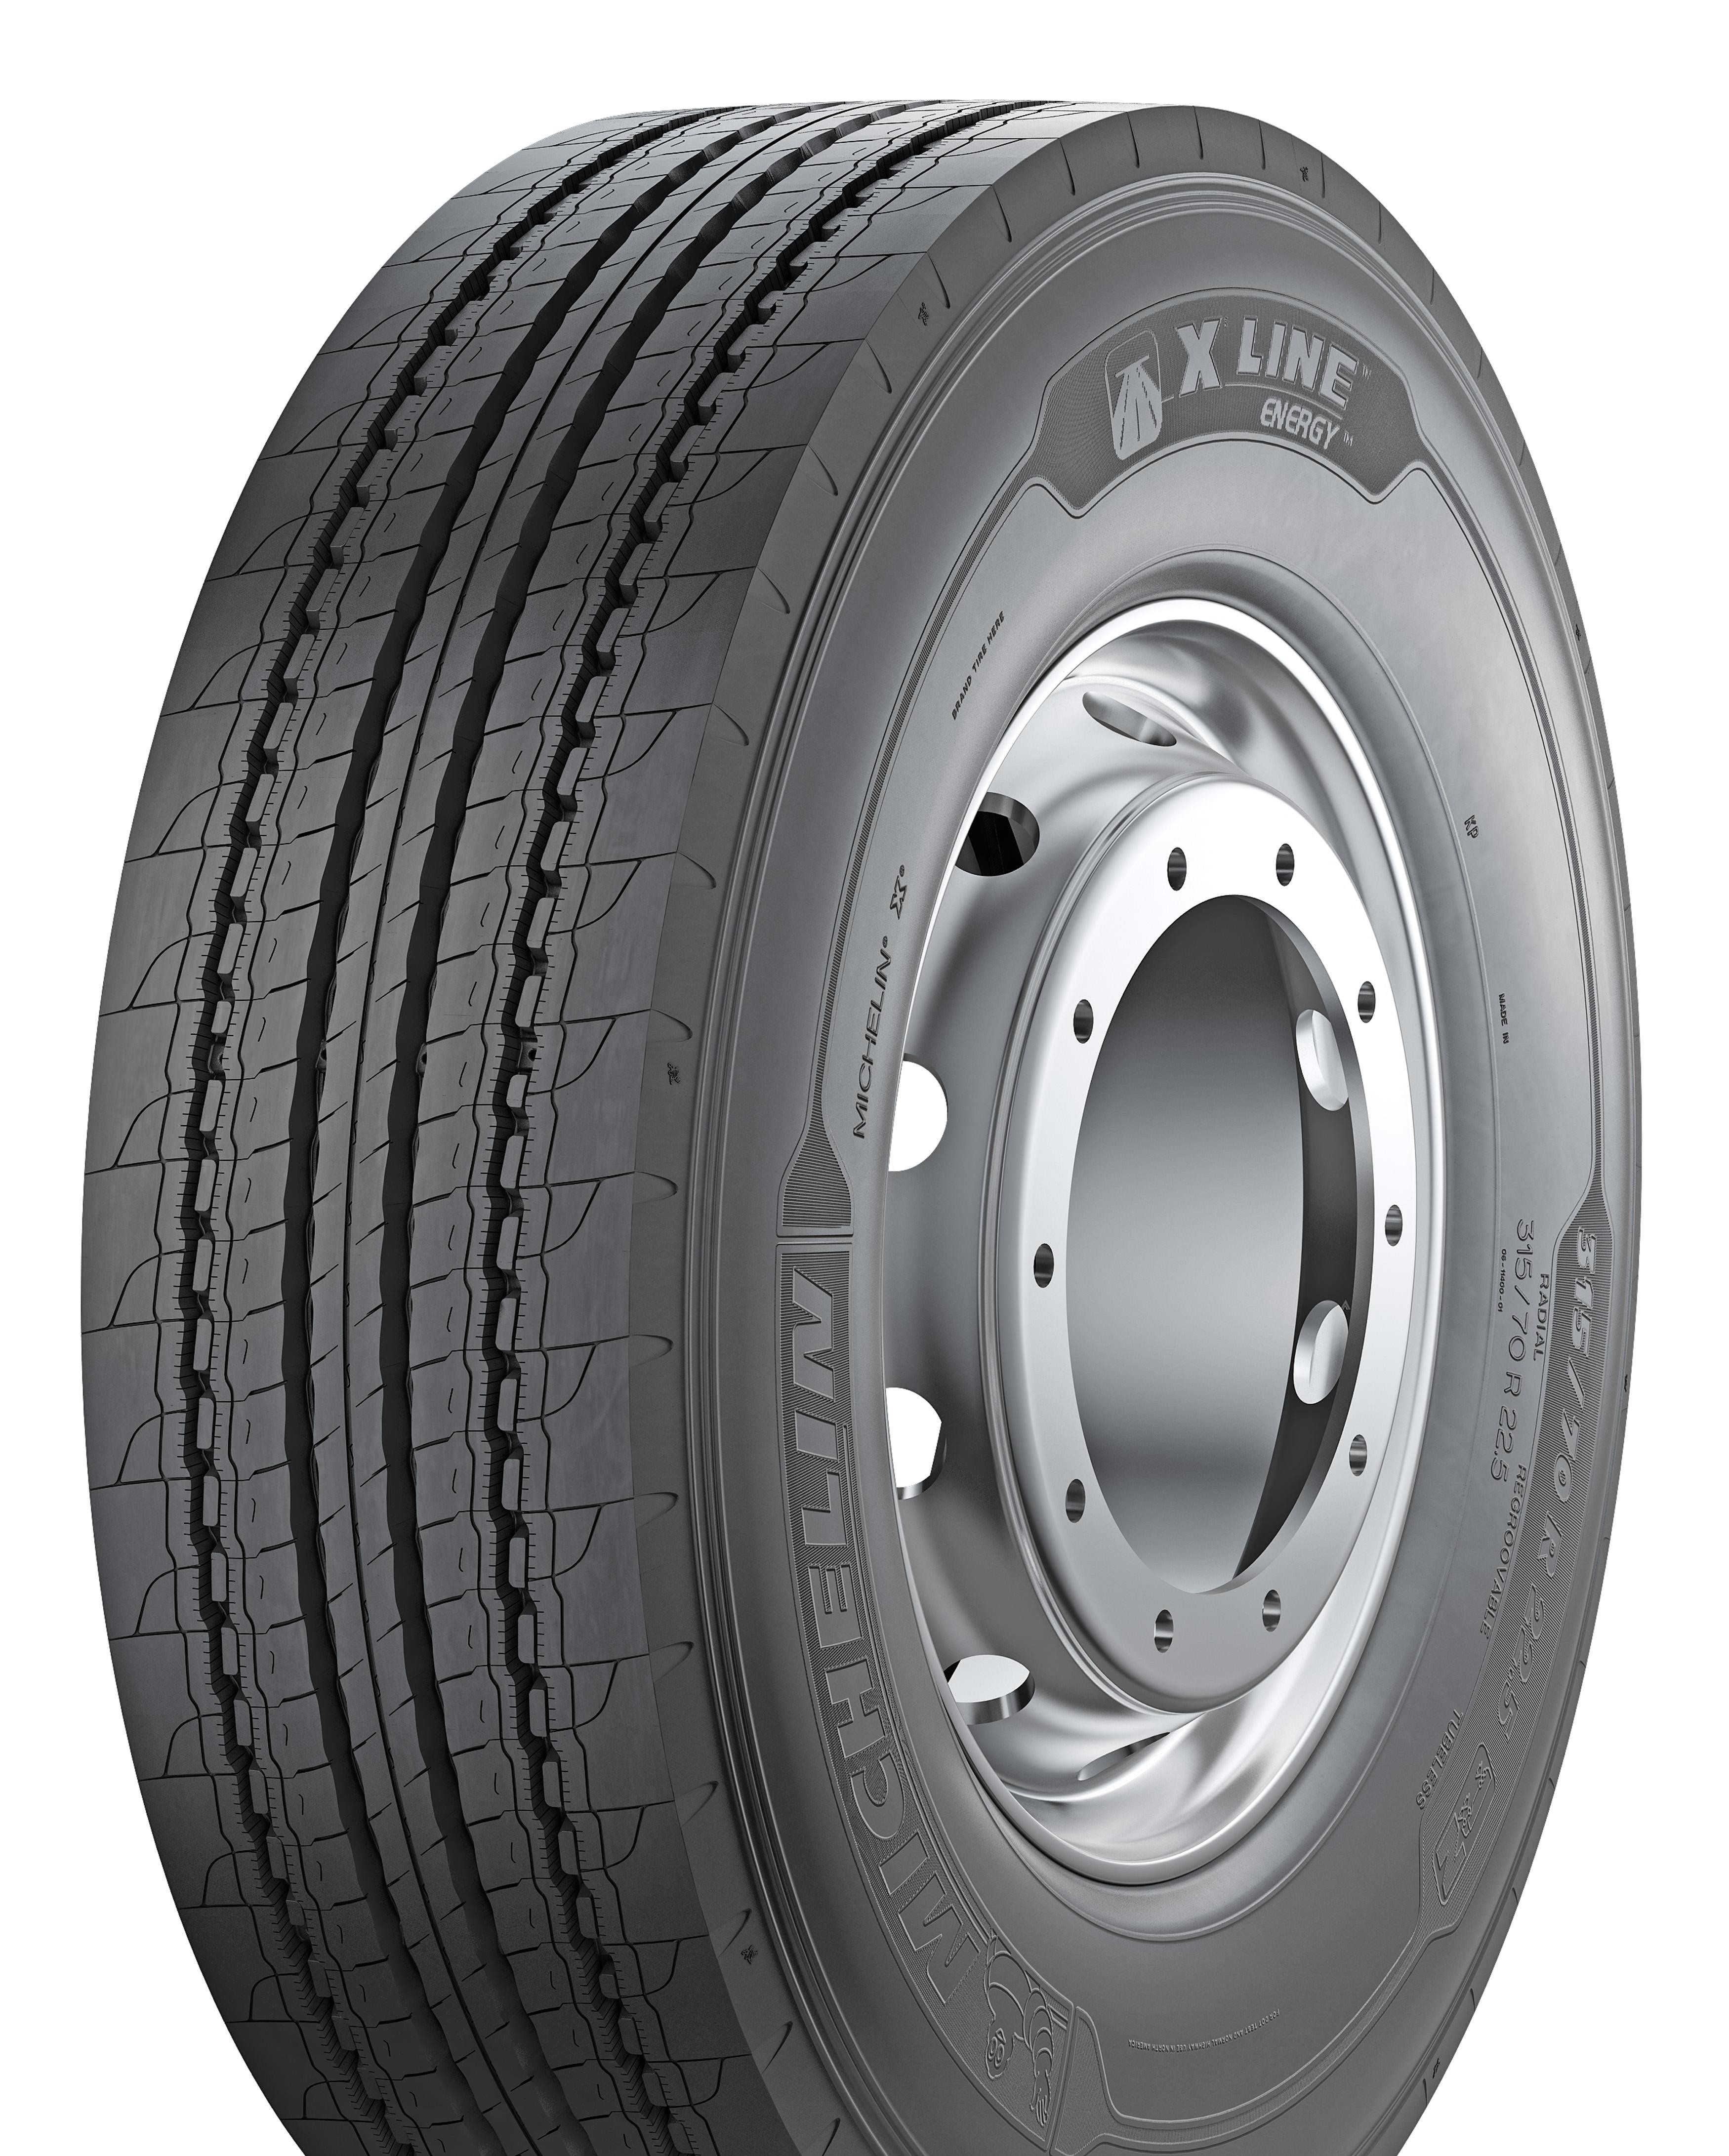 Michelin X LINE Energy Z 315/60R22.5 154/148L рулевая PR